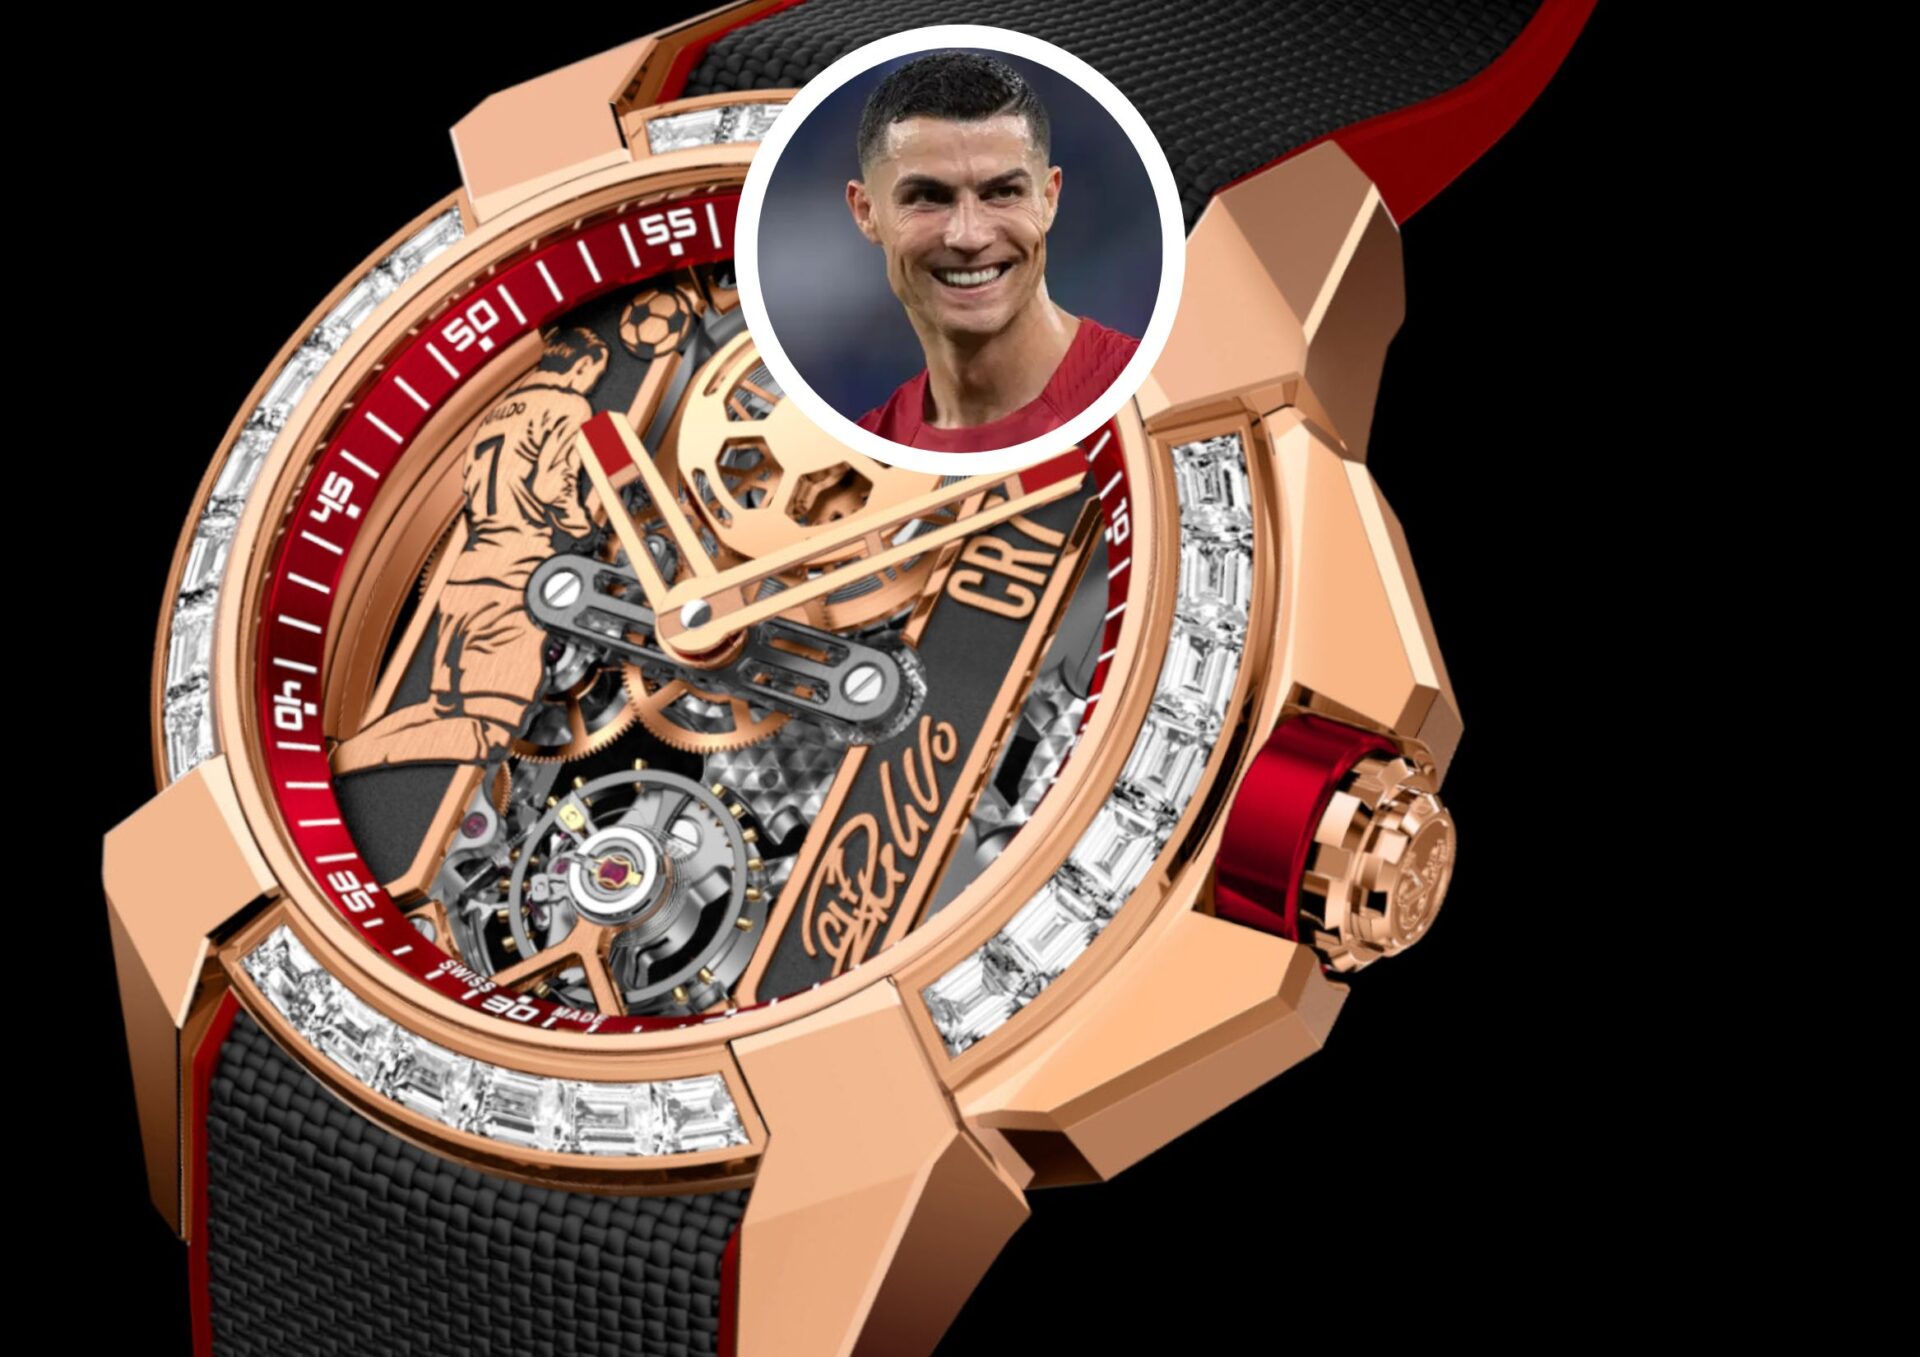 Main Image of Christiano Ronaldo Watch